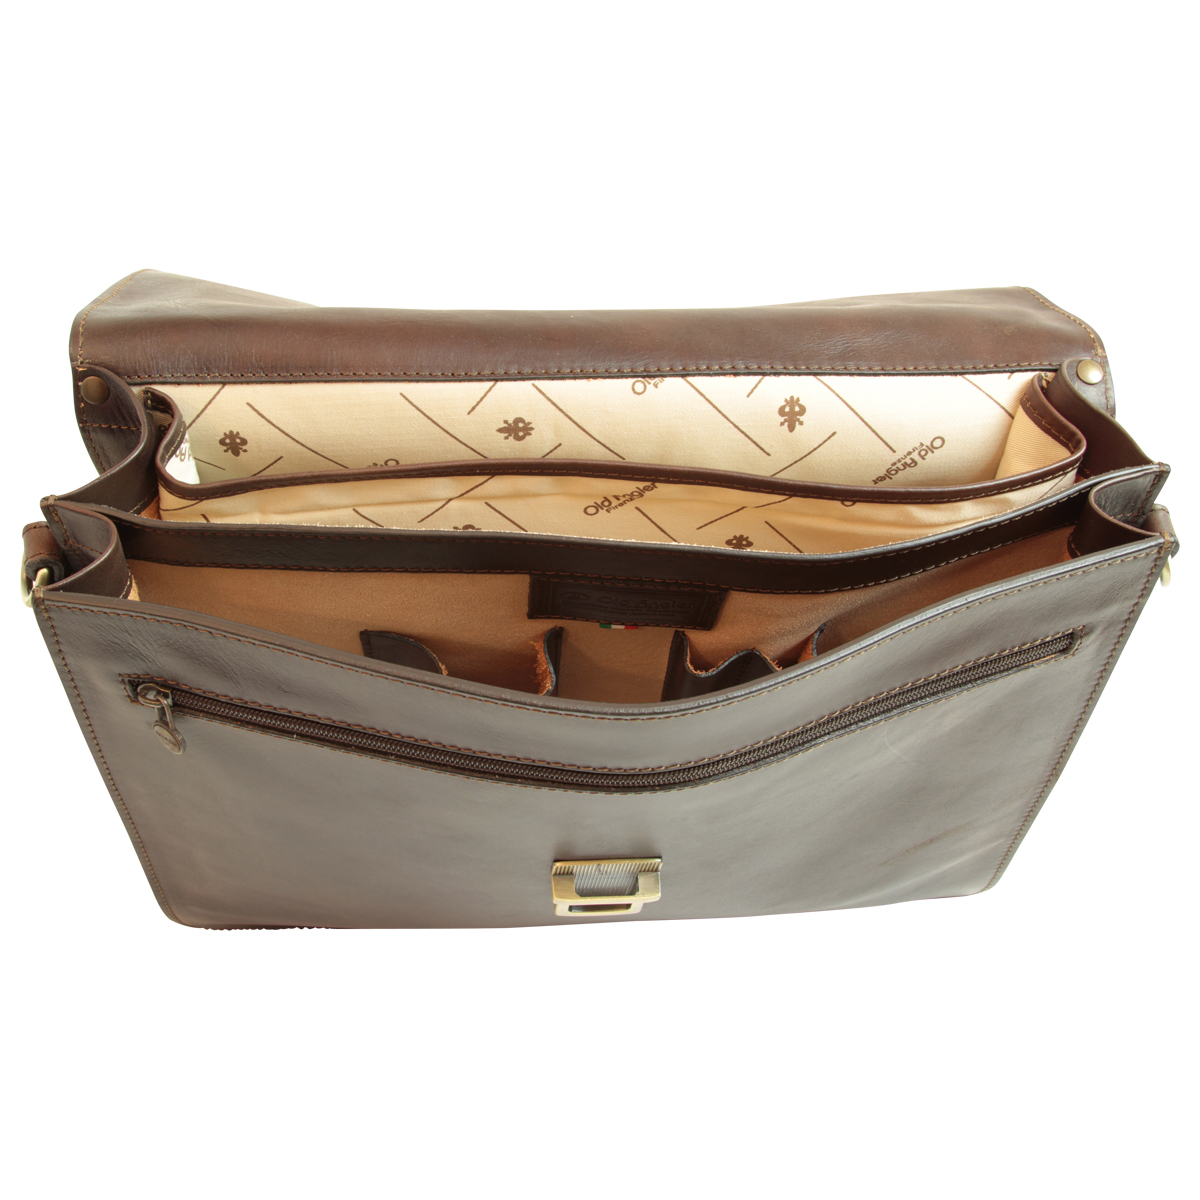 Leather Laptop Briefcase - Dark Brown | 052889TM US | Old Angler Firenze